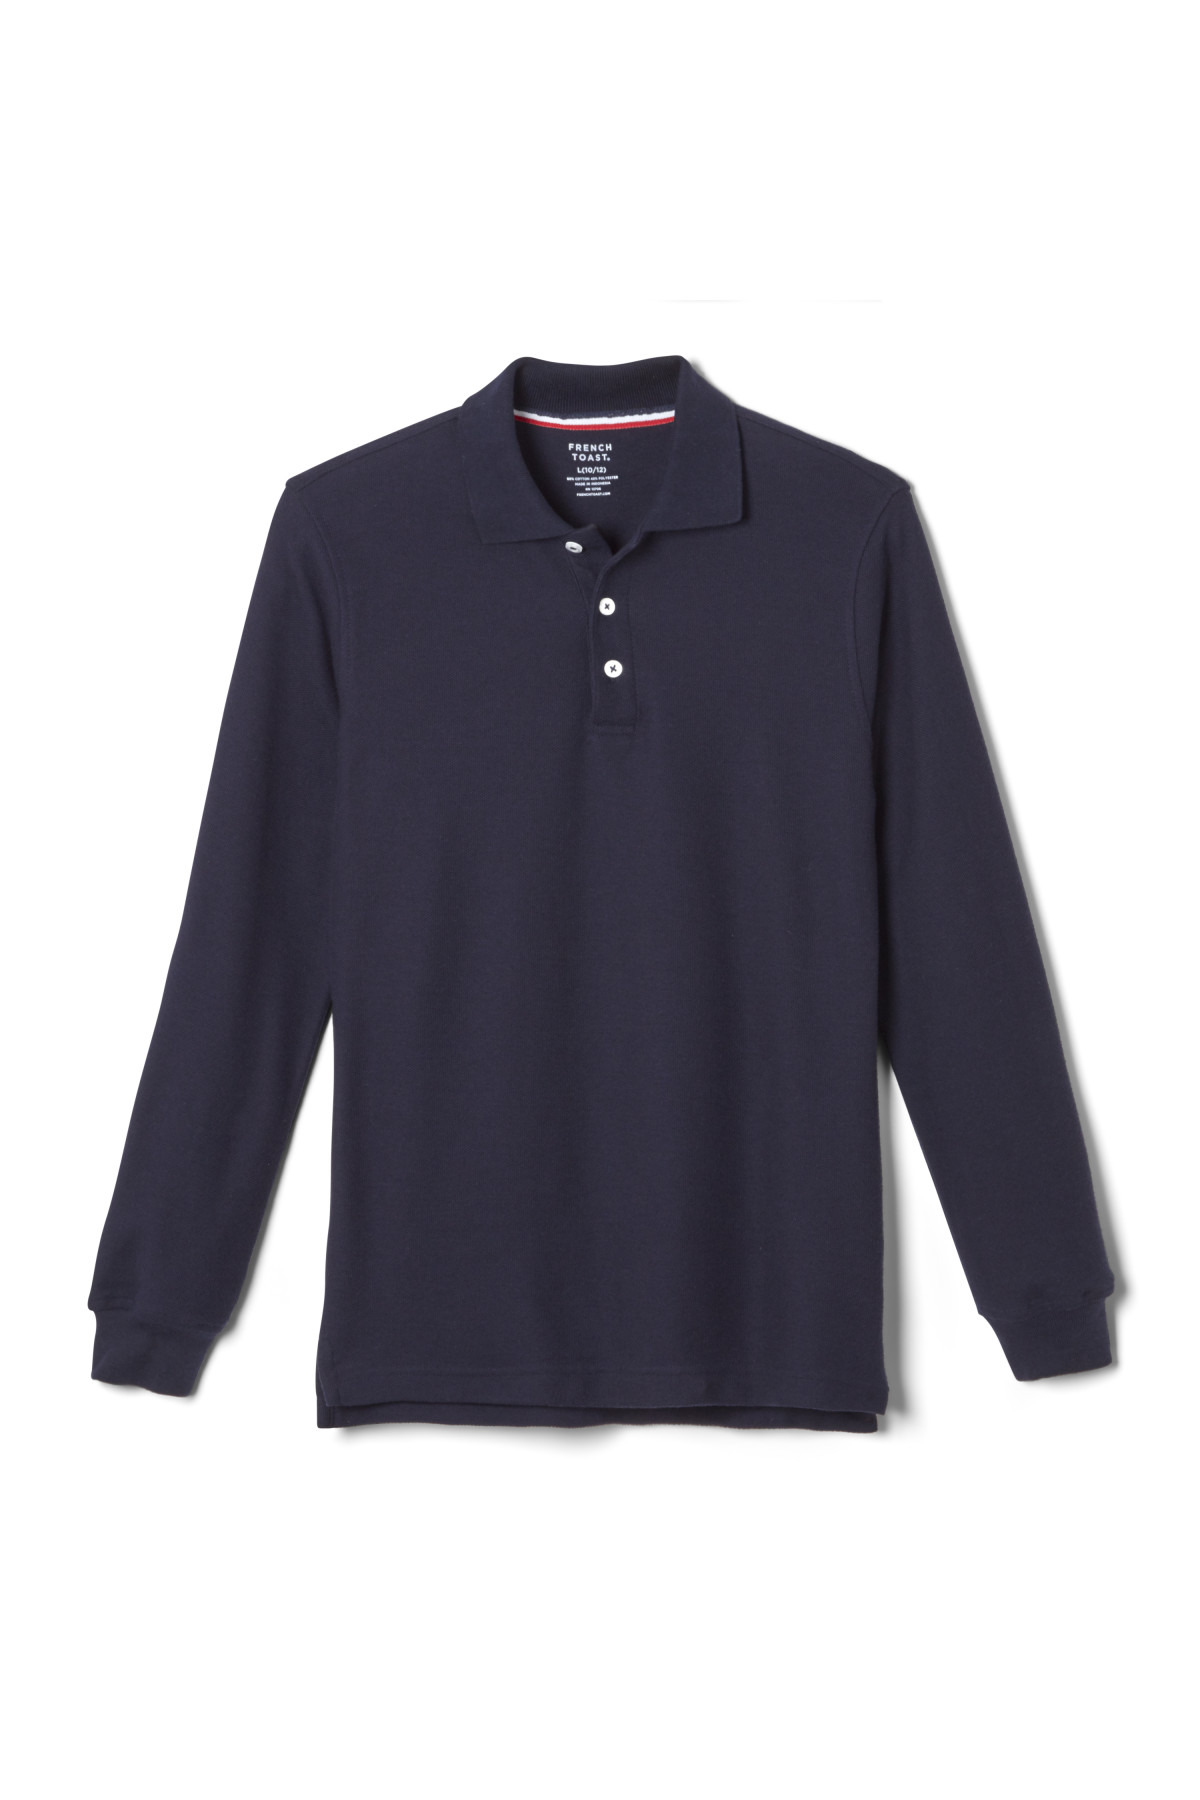 Wholesale Adult Size Long Sleeve Pique Polo Shirt School Uniform in Orange